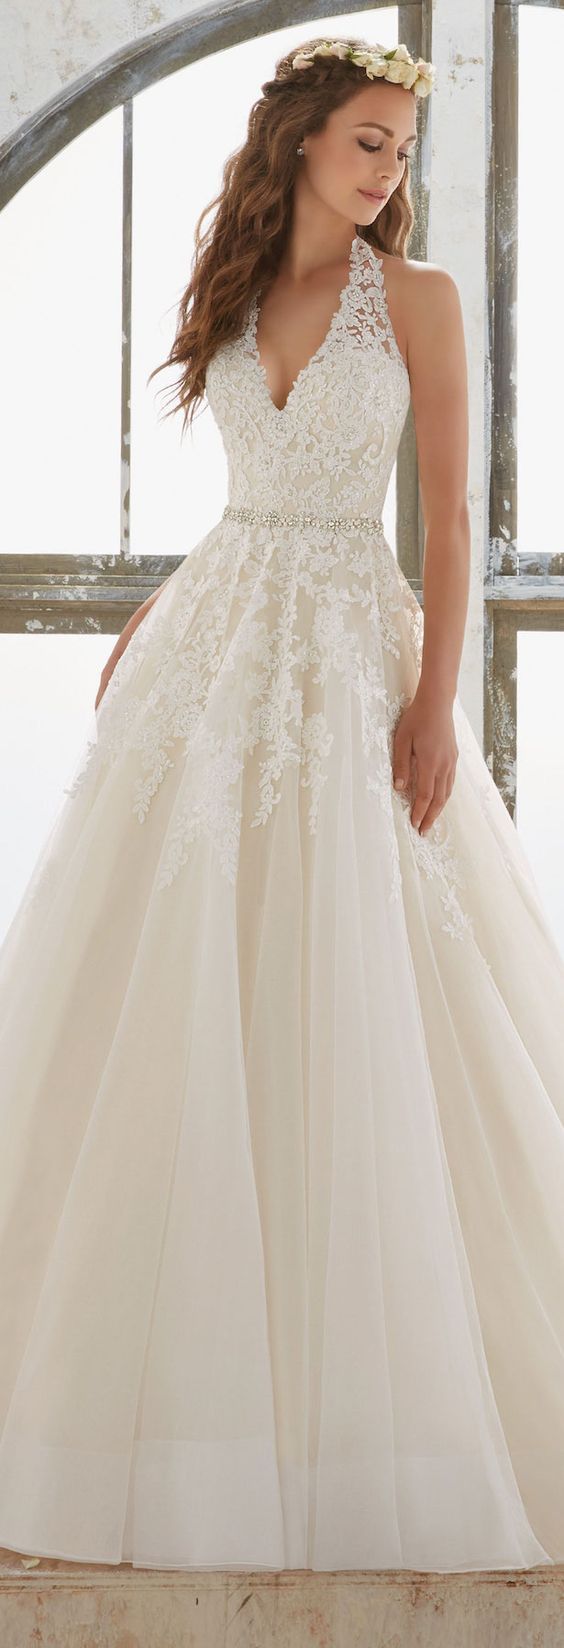 Wedding - Wedding Dress Inspiration - Mori Lee